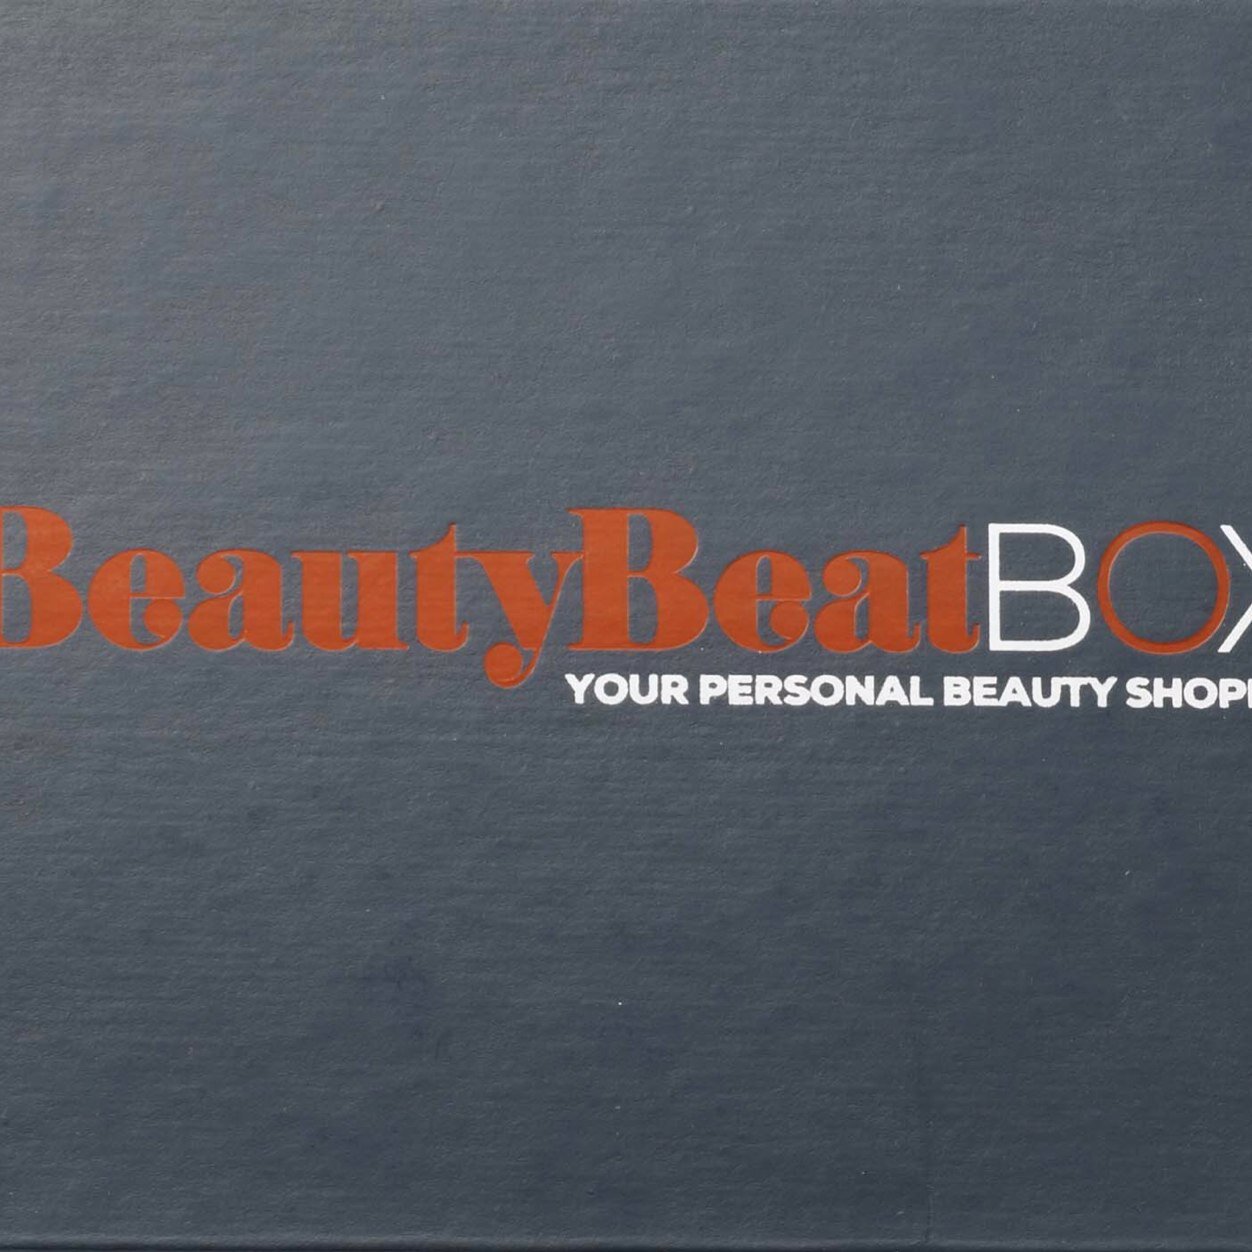 beautybeatbox Profile